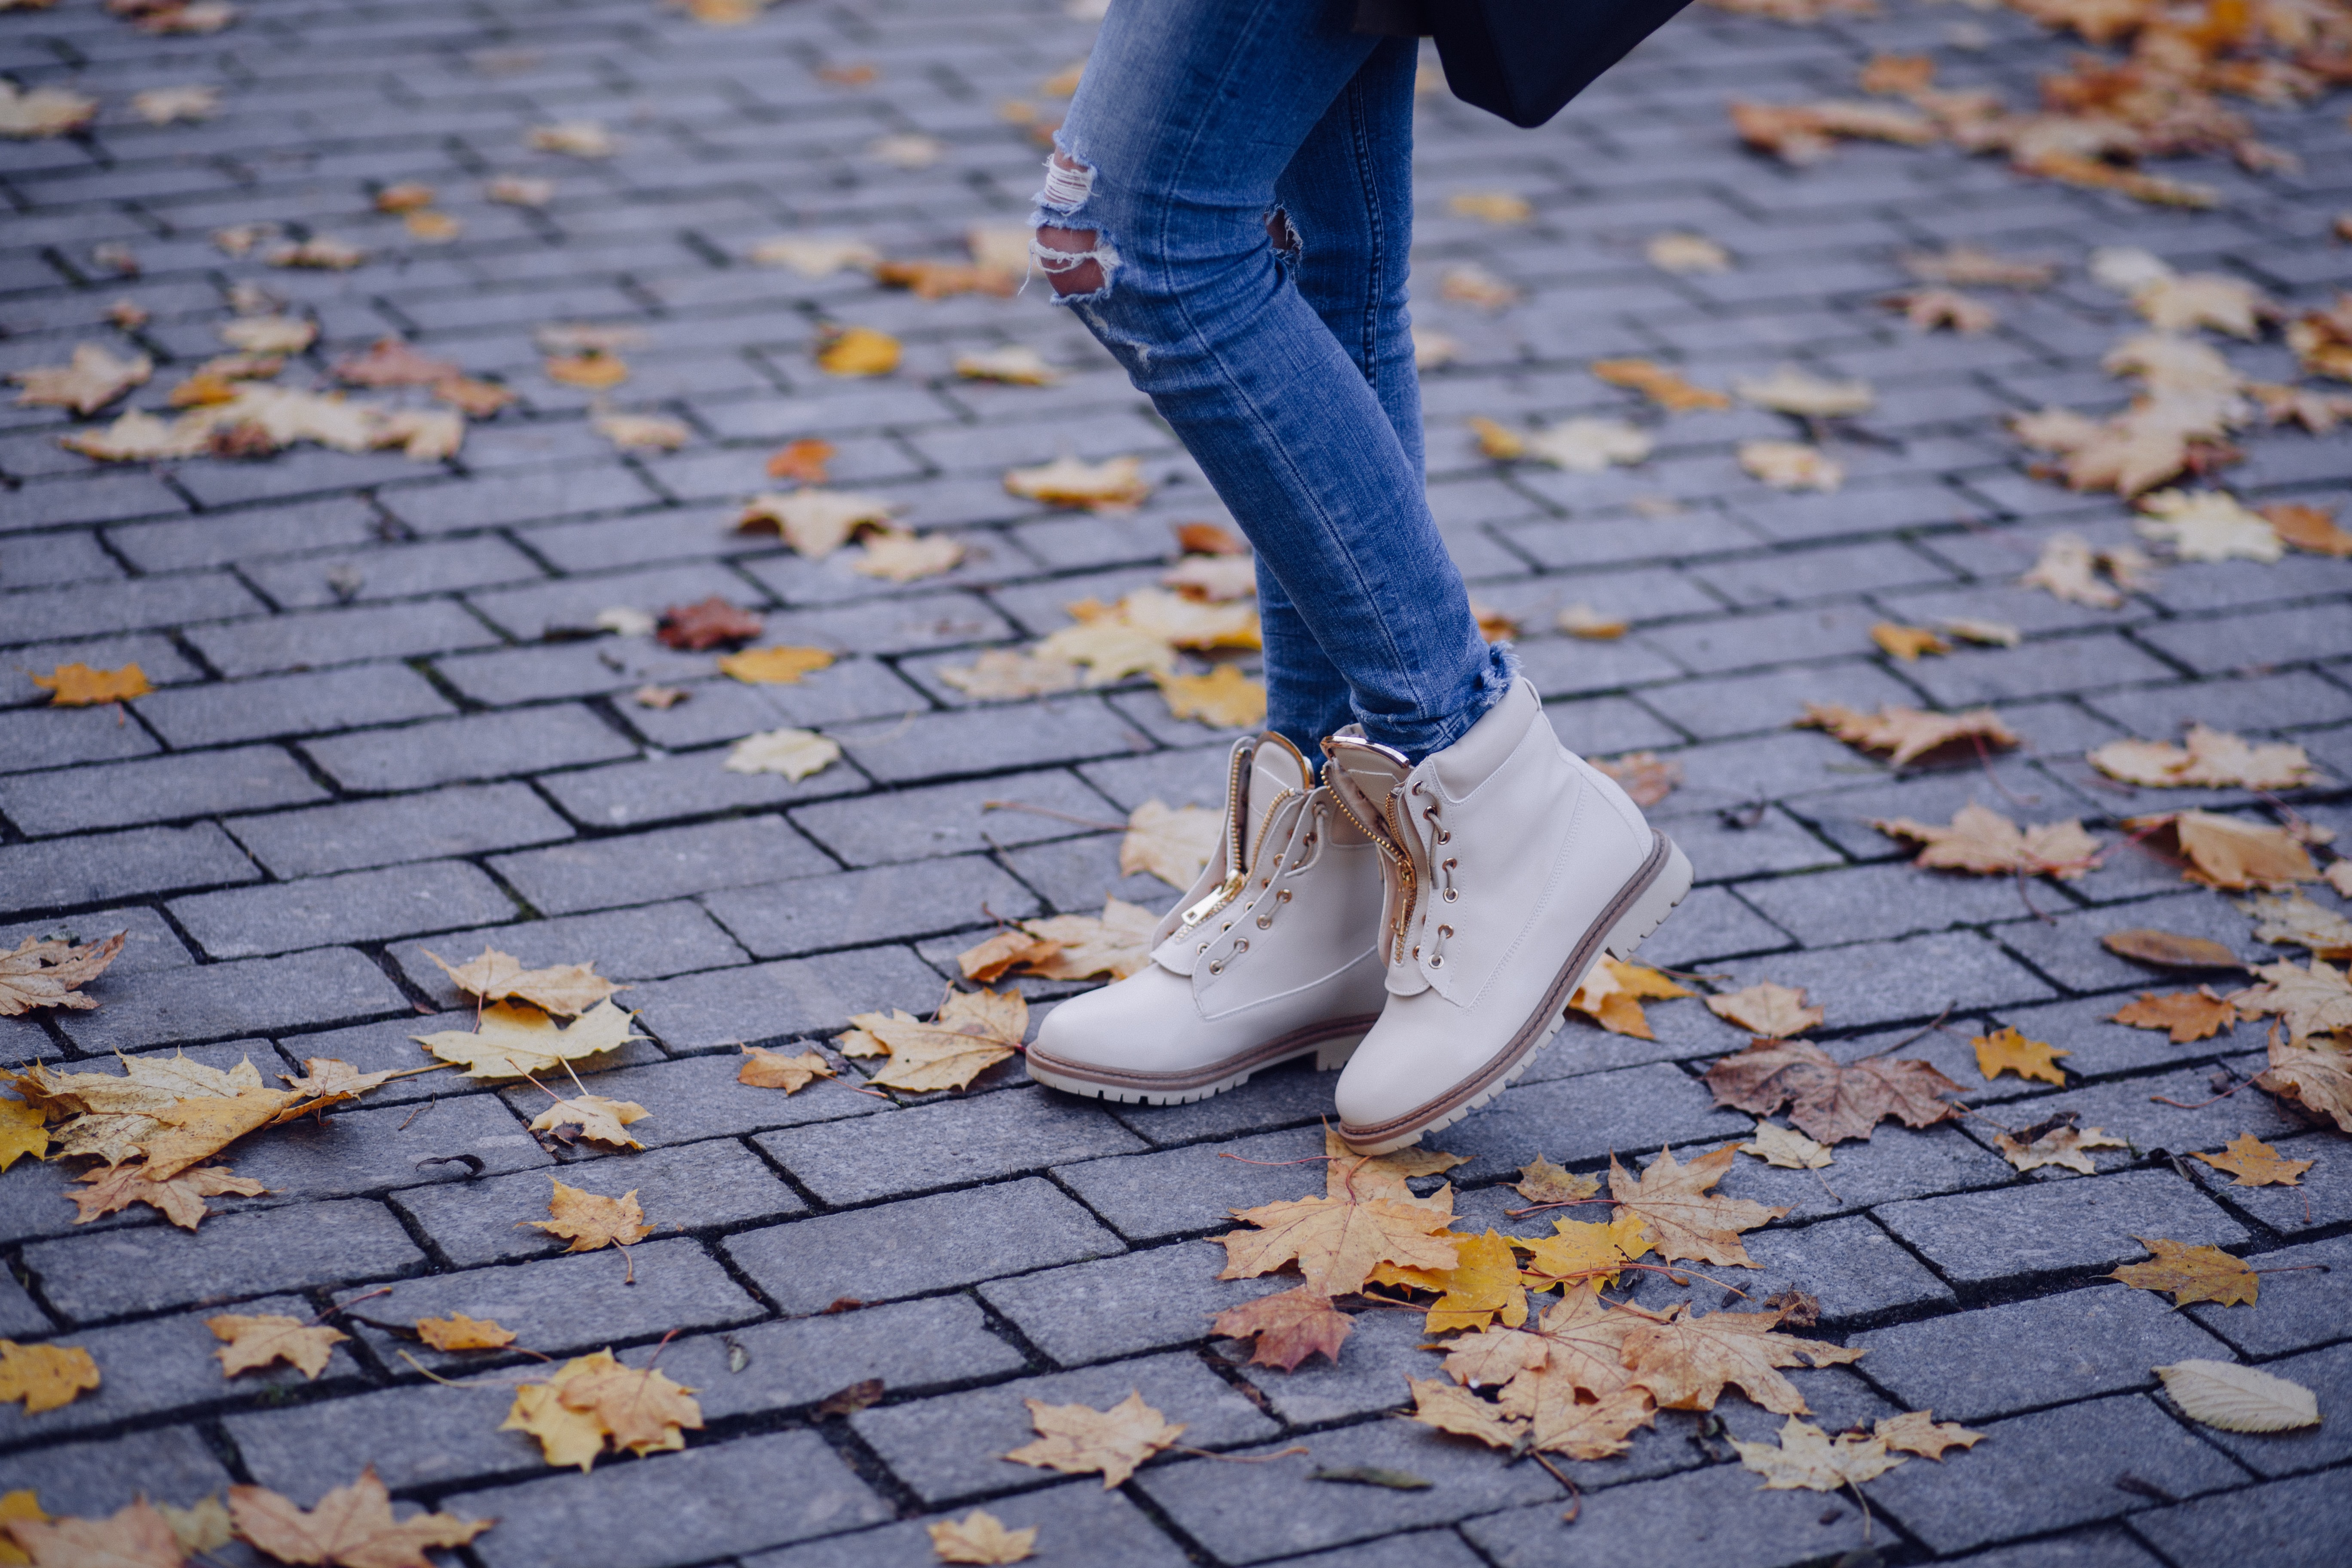 Woman's legs in jeans standing on brick walkway